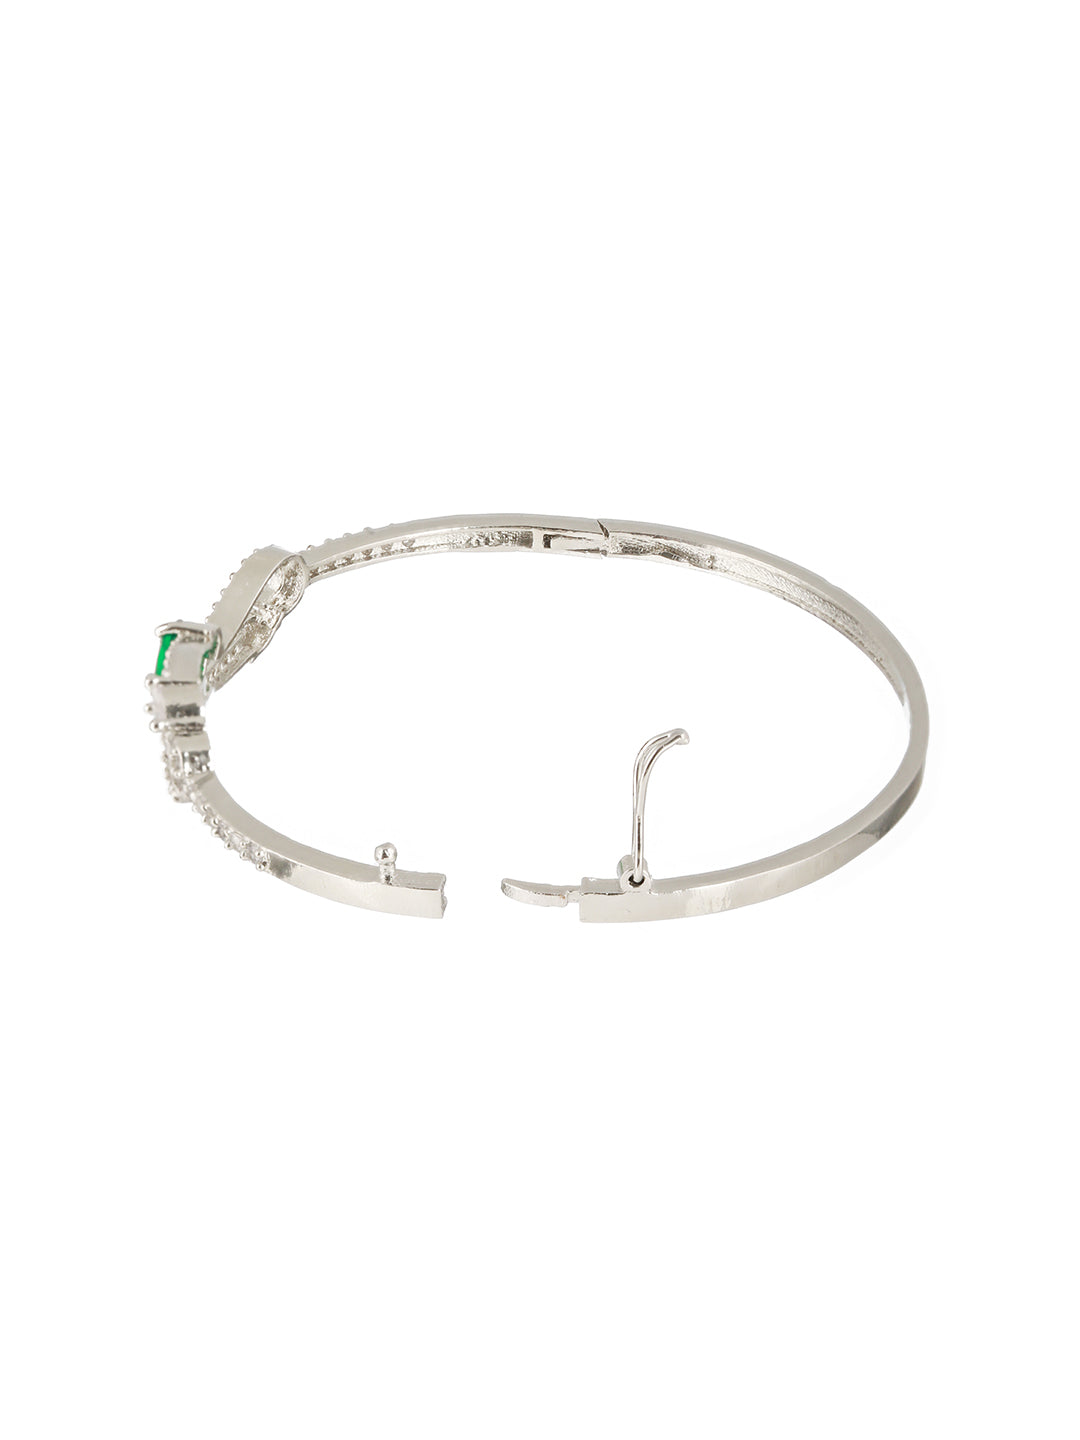 Green & White American Diamond Studded Rhodium-Plated Link Bracelet